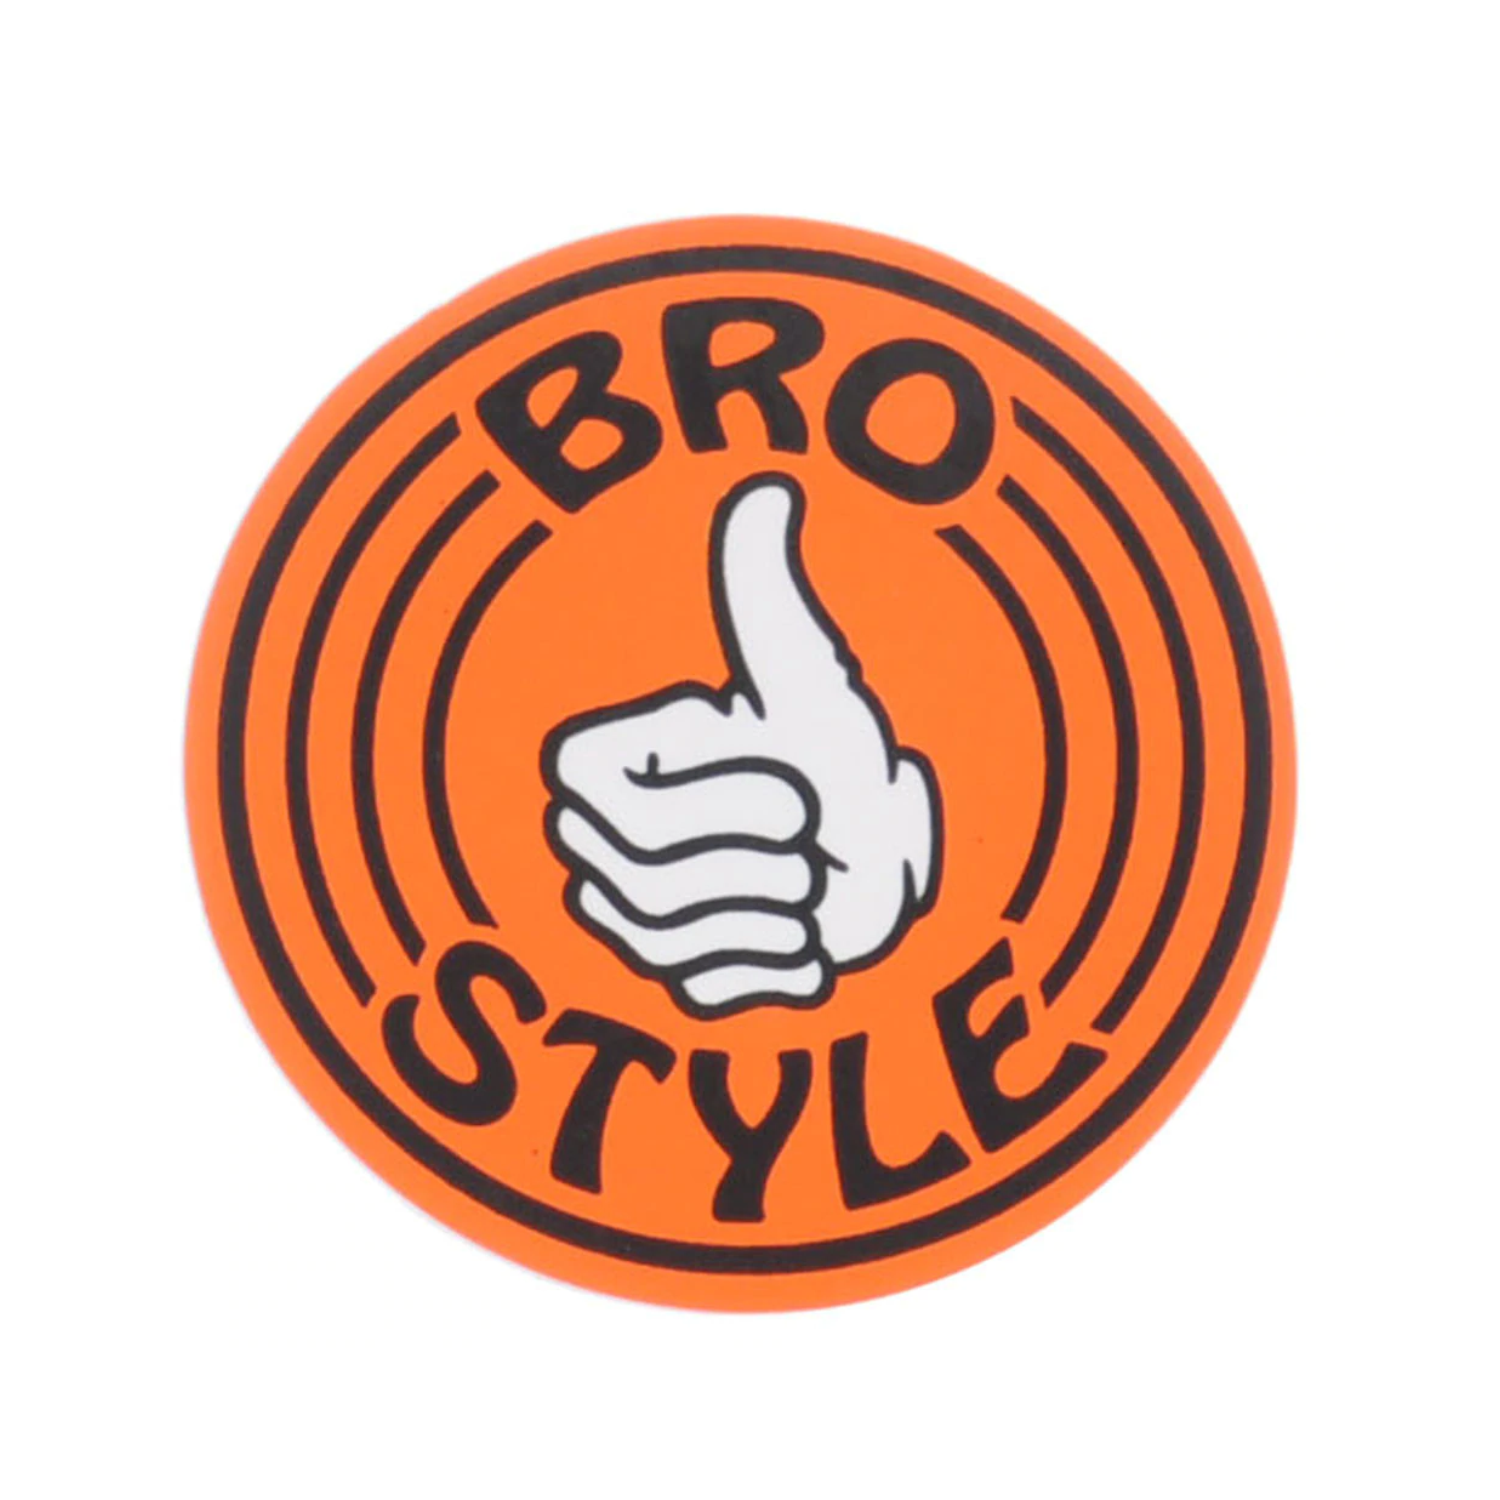 Bro Style - Logo